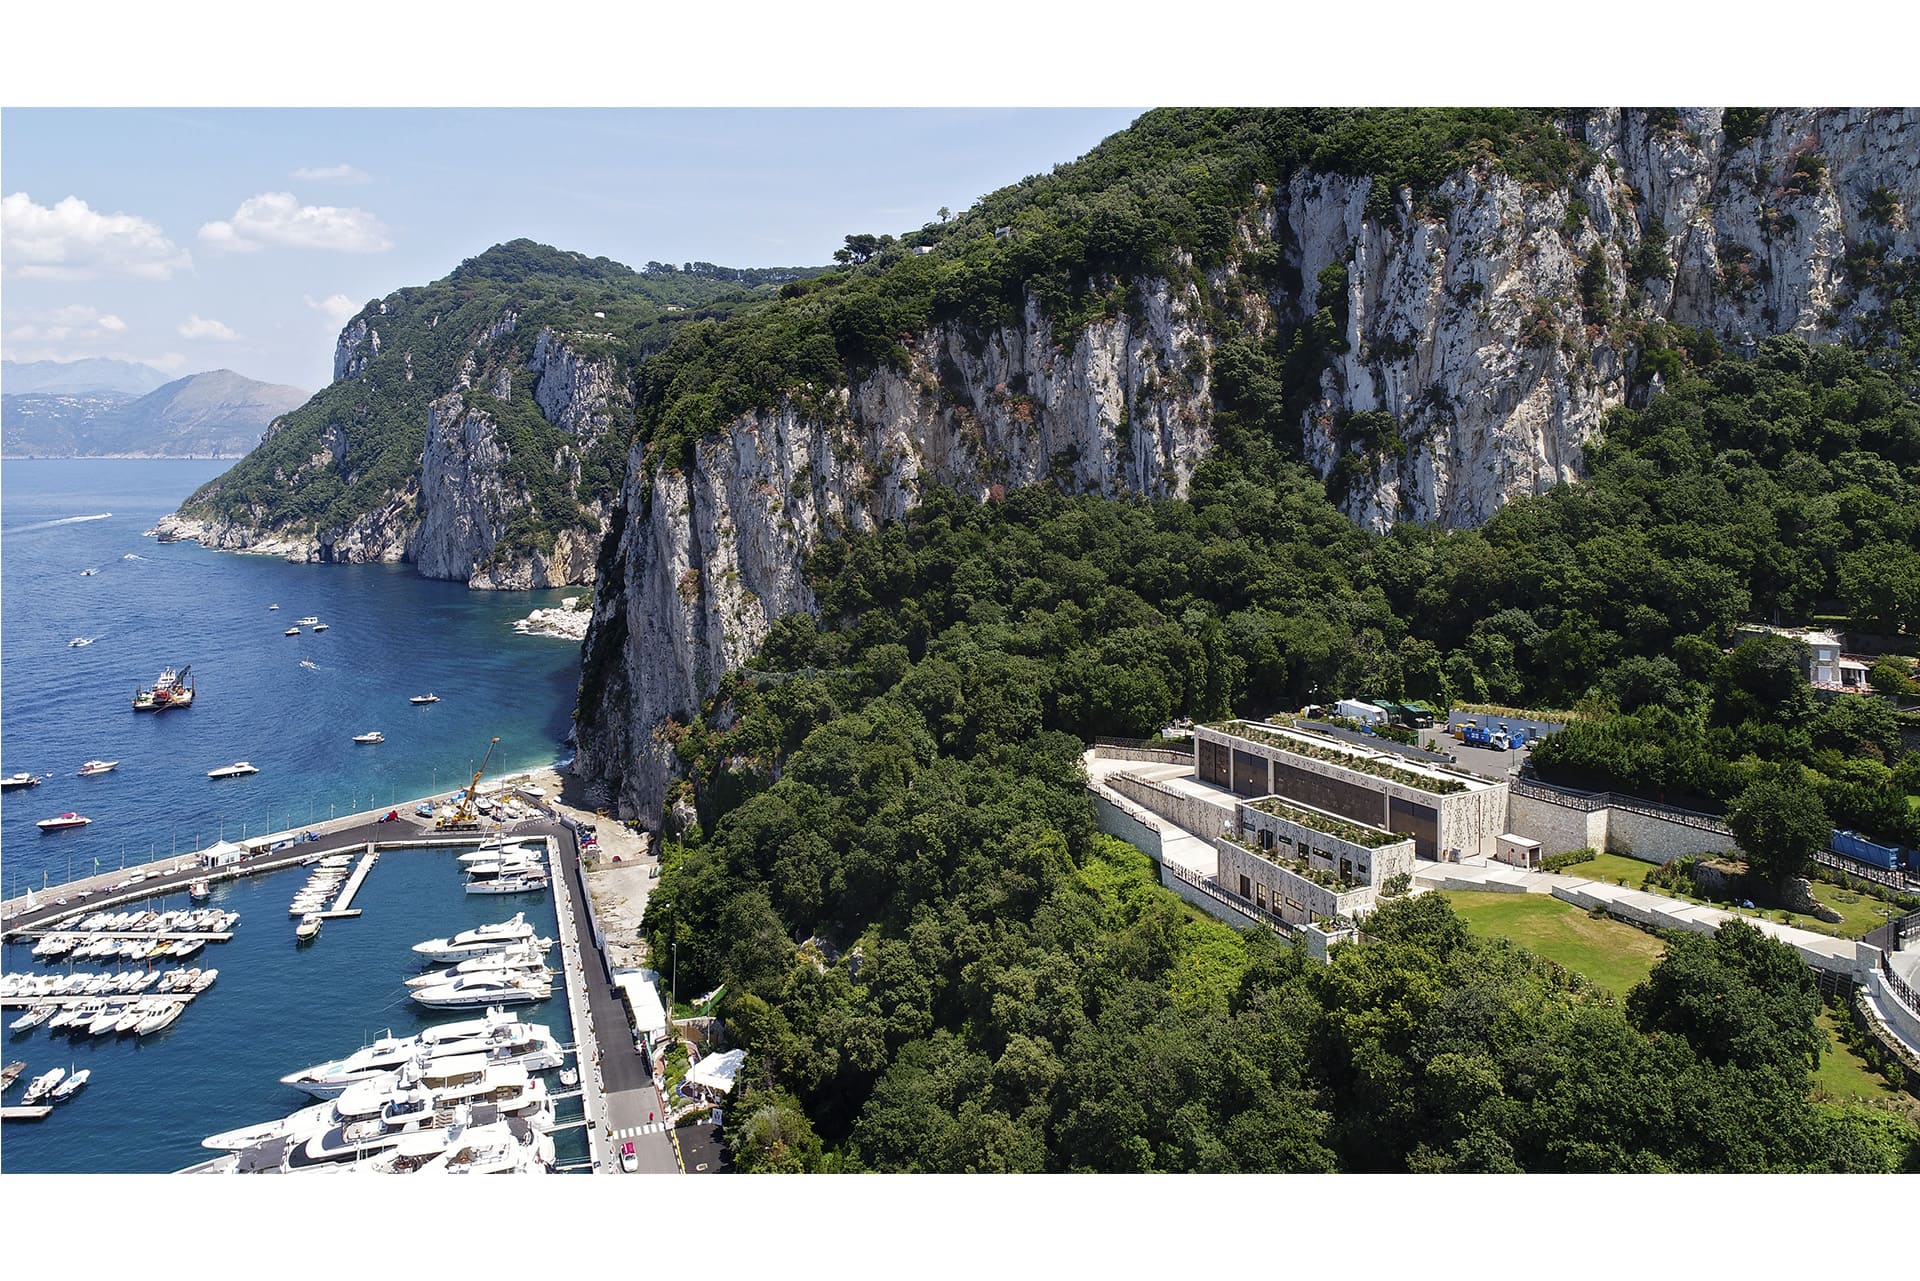 New terna electrical station, Capri (NA), Italy, Frigerio Design Group <br /> Image copyright: @Enrico Cano